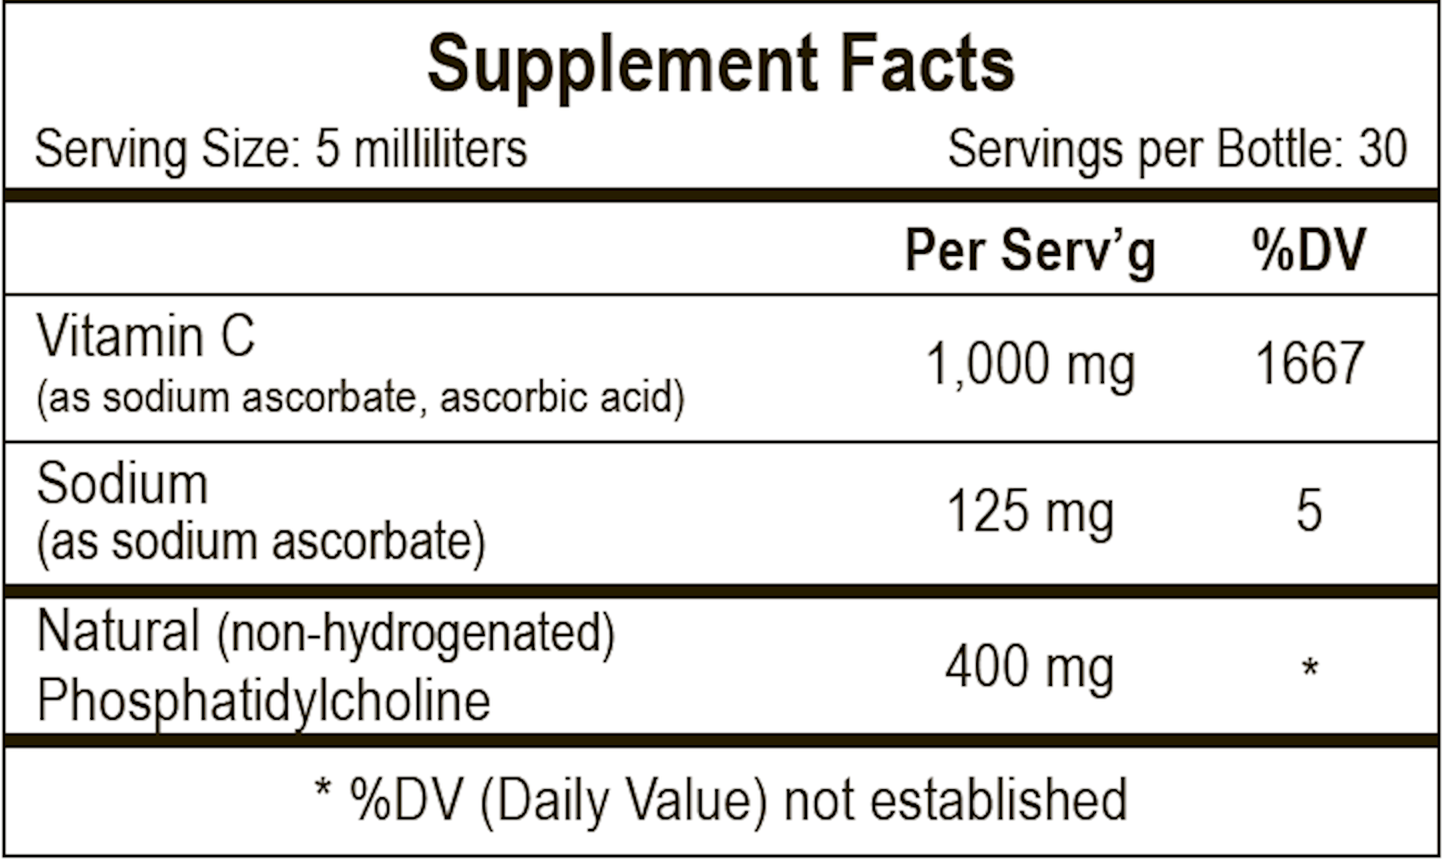 Empirical Liposomal Vitamin C 5 oz - Ruti